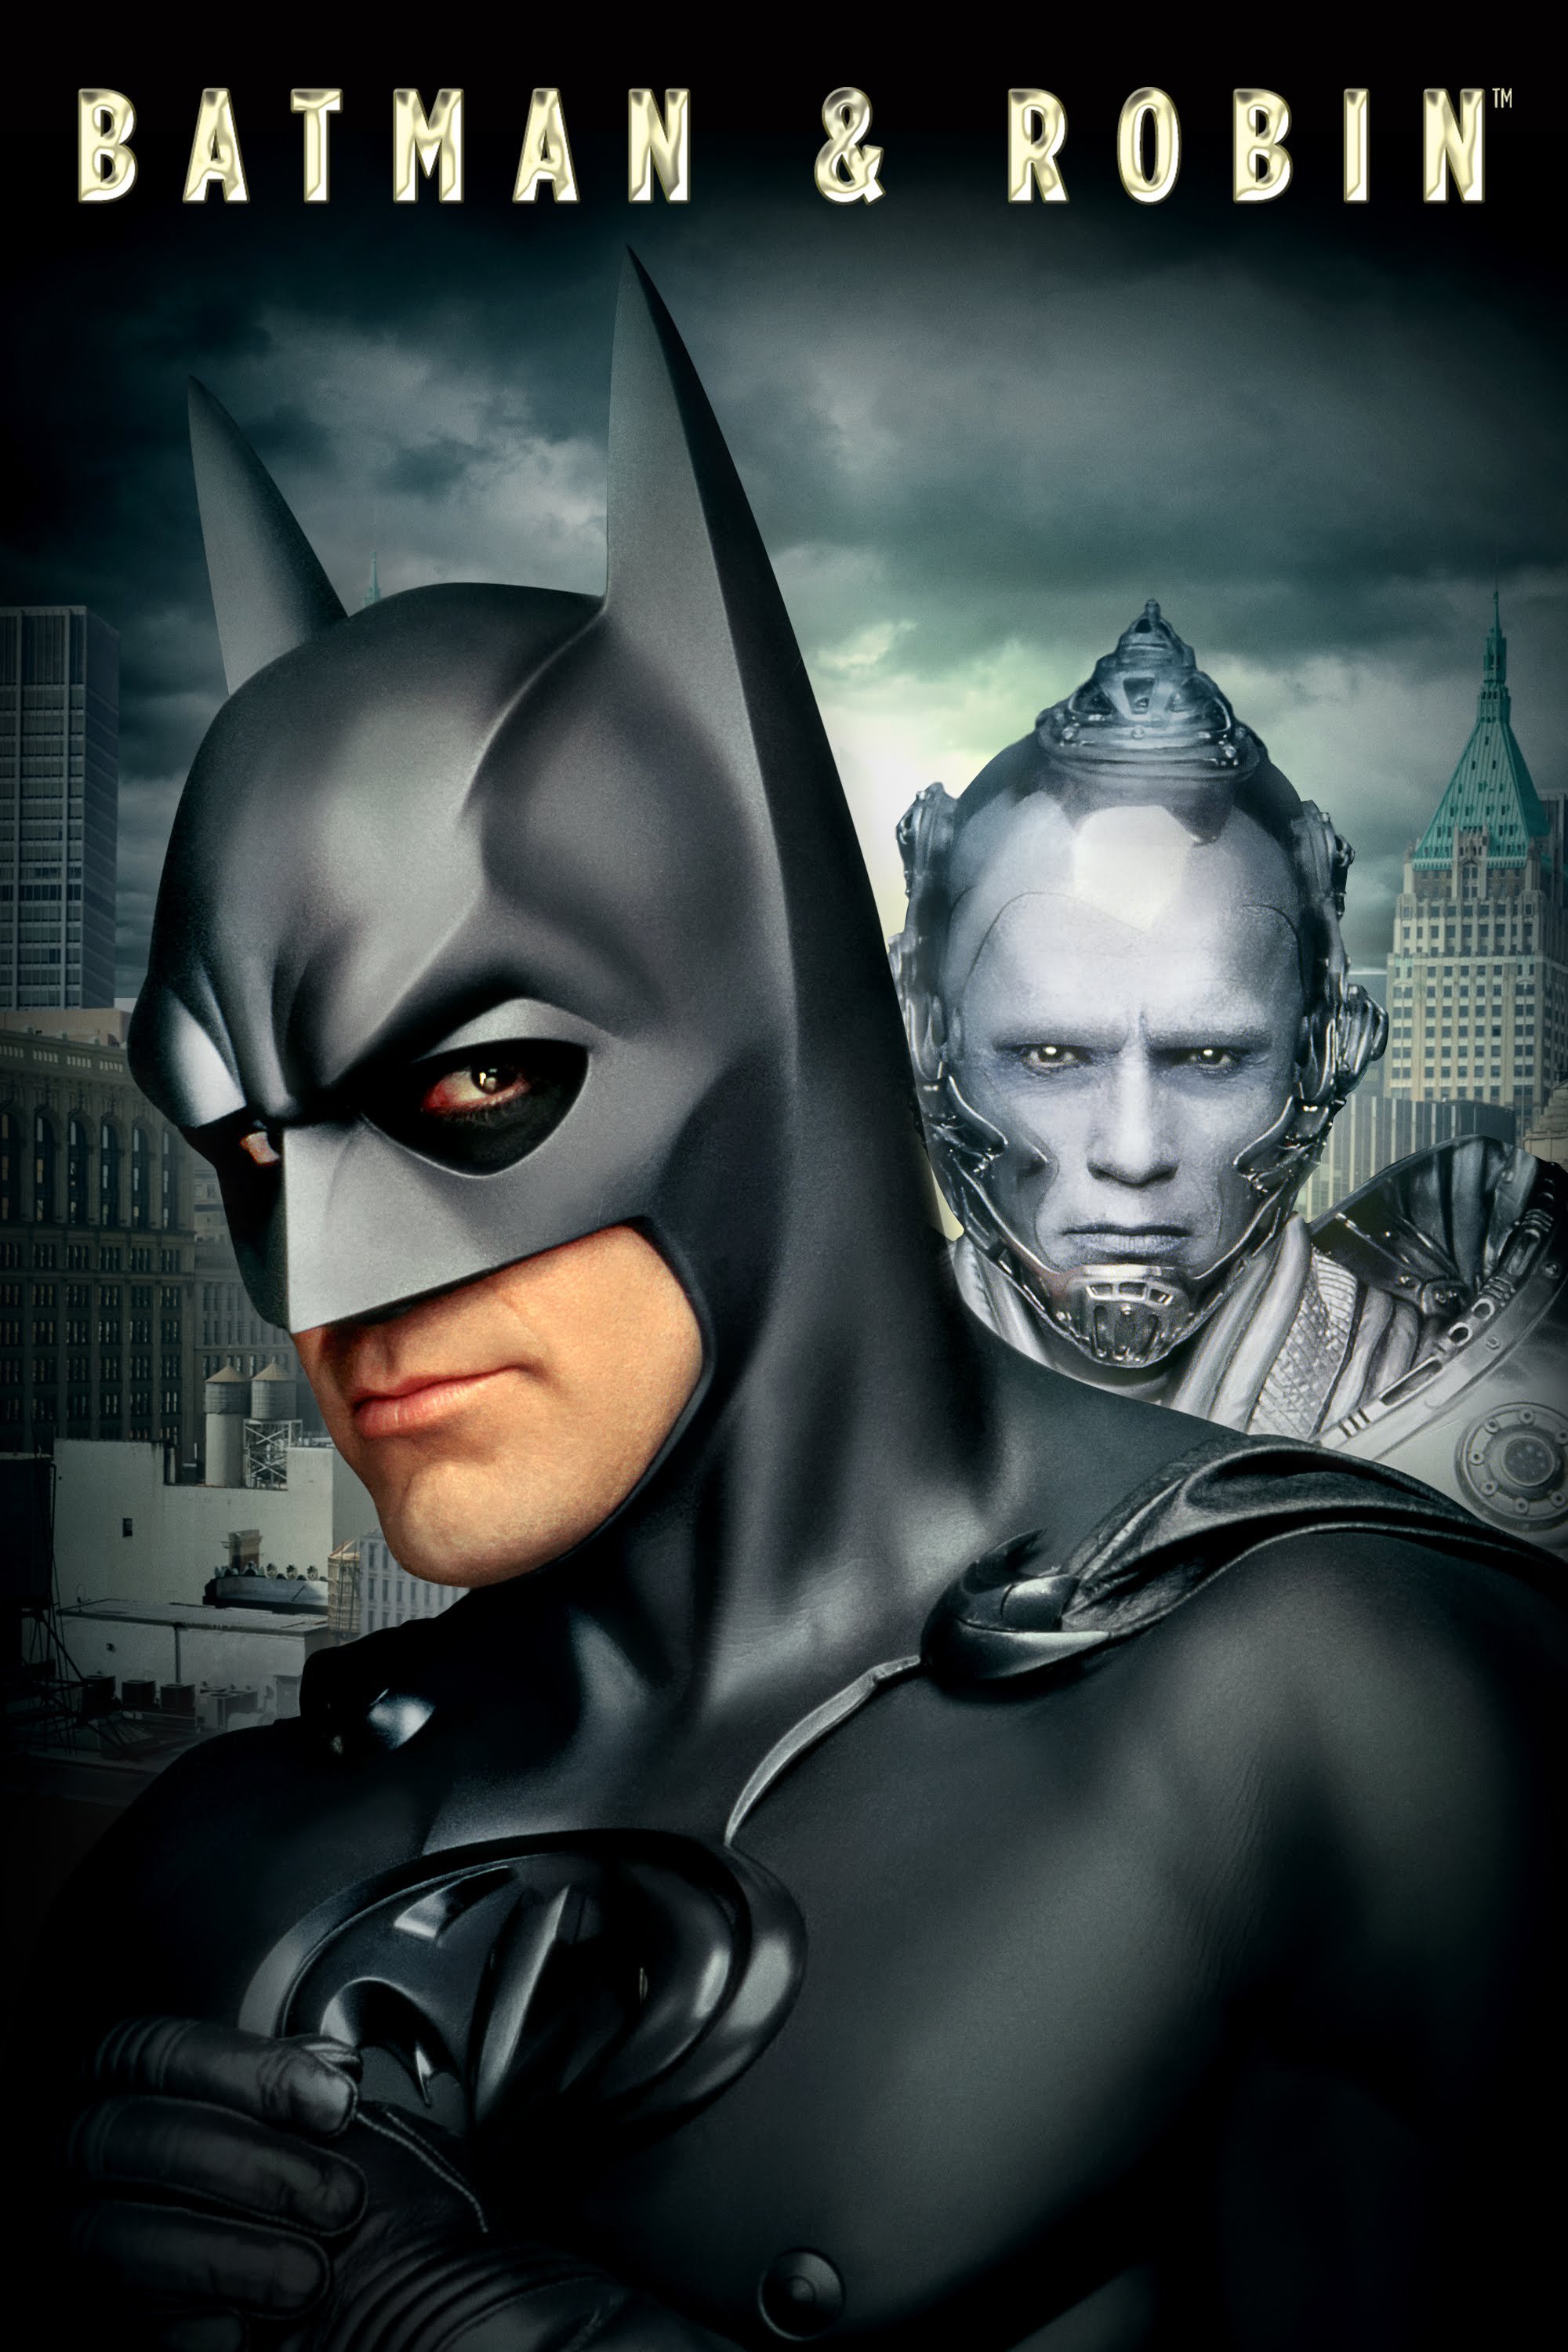 Previous Batman Films Get Updated Box Art Dark Knight News